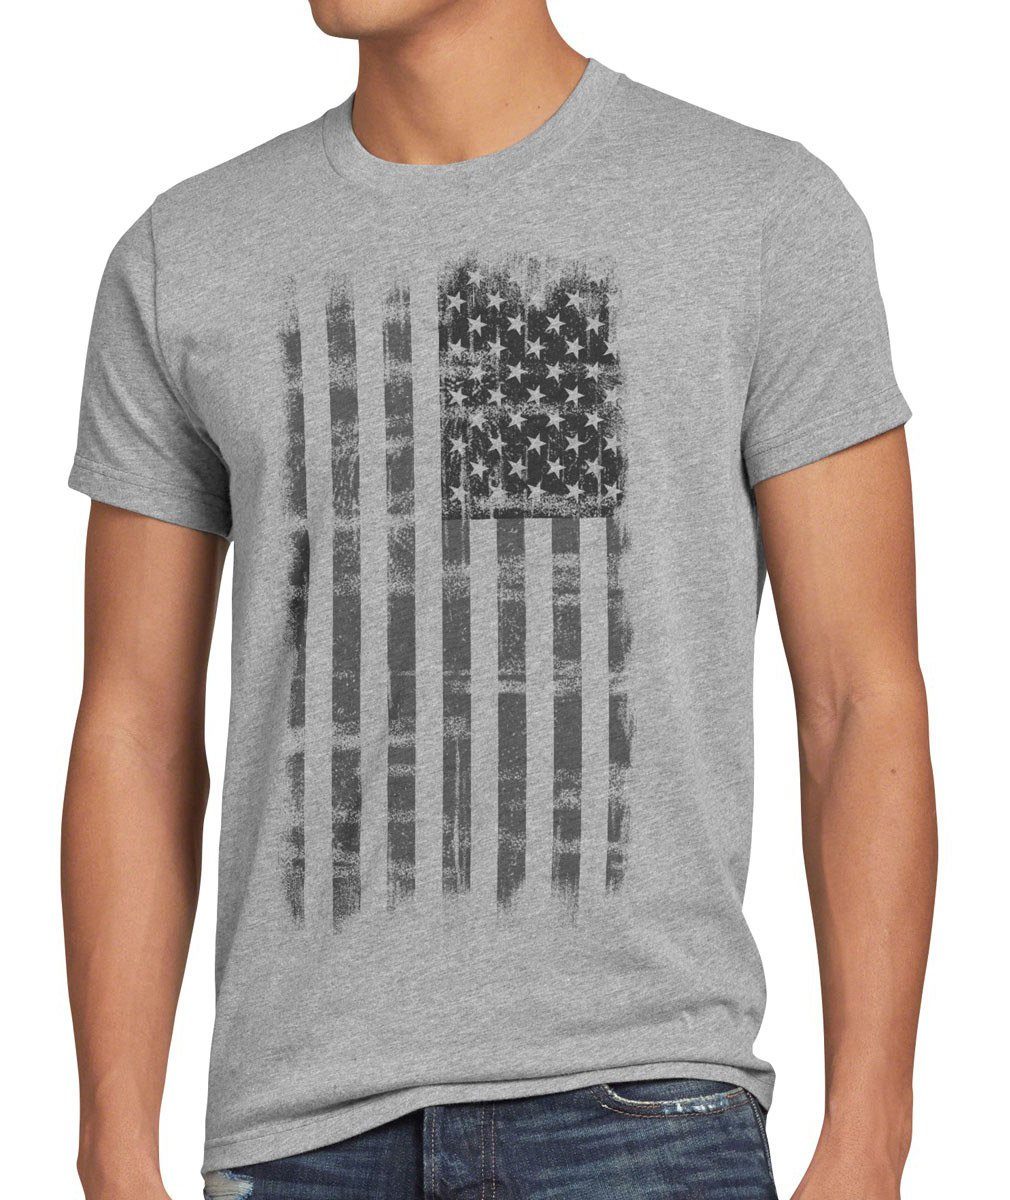 style3 Print-Shirt United grau stripes Flagge us T-Shirt USA meliert States Vintage stars america Herren Amerika